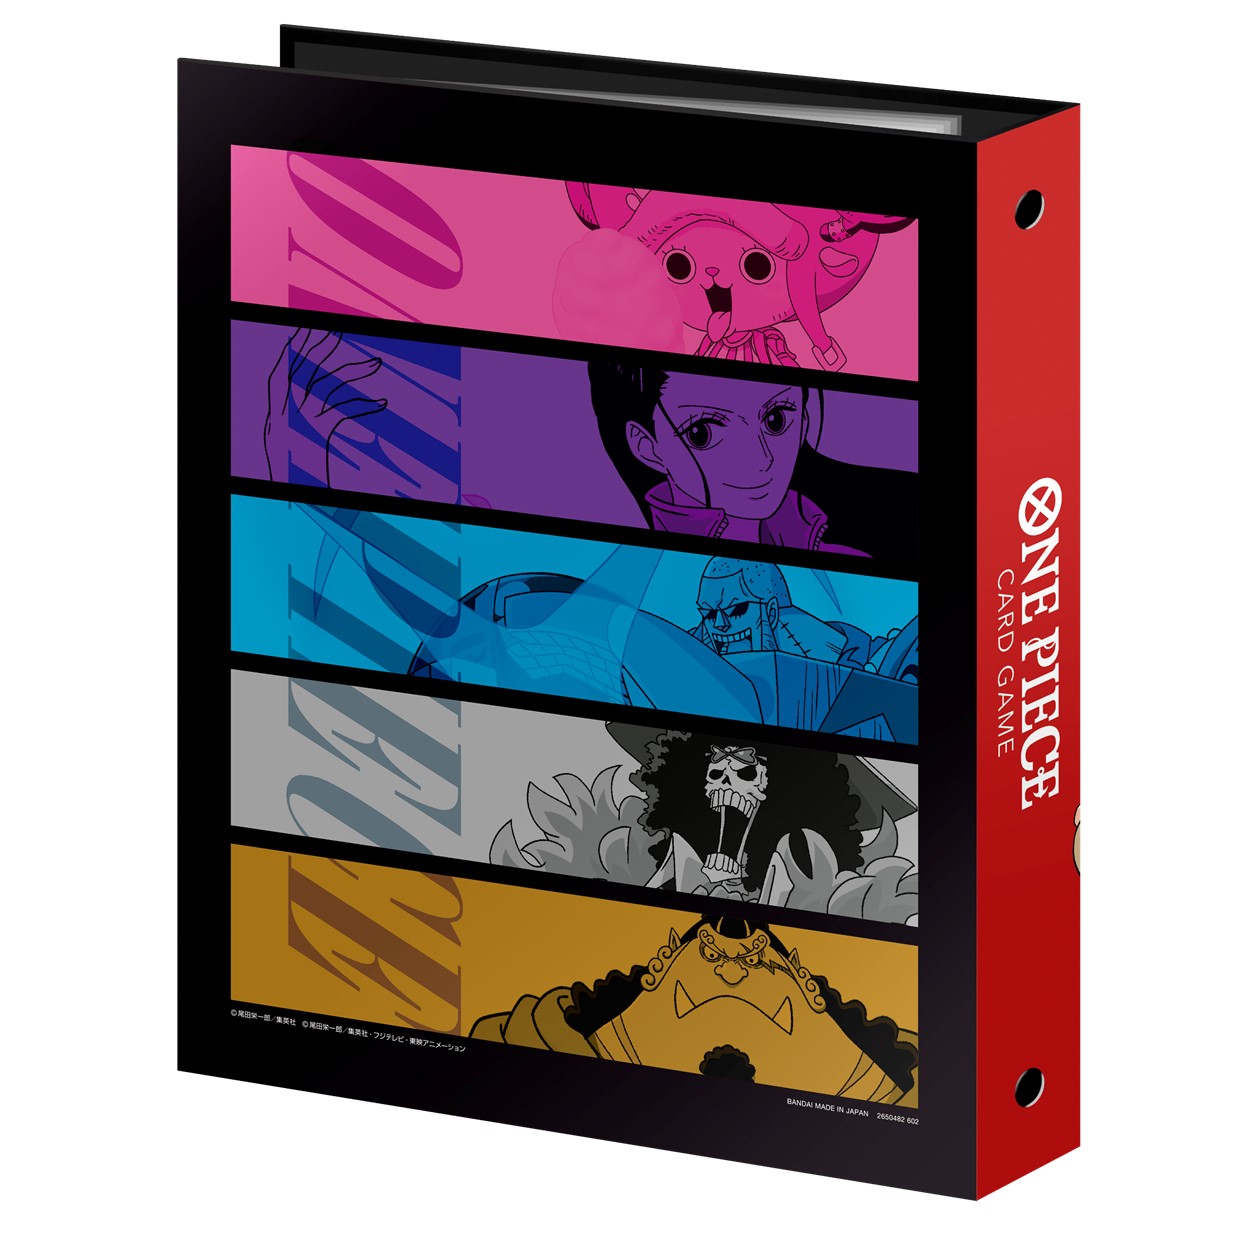 ONE PIECE CARD GAME 9-Pocket Binder Set Anime Version